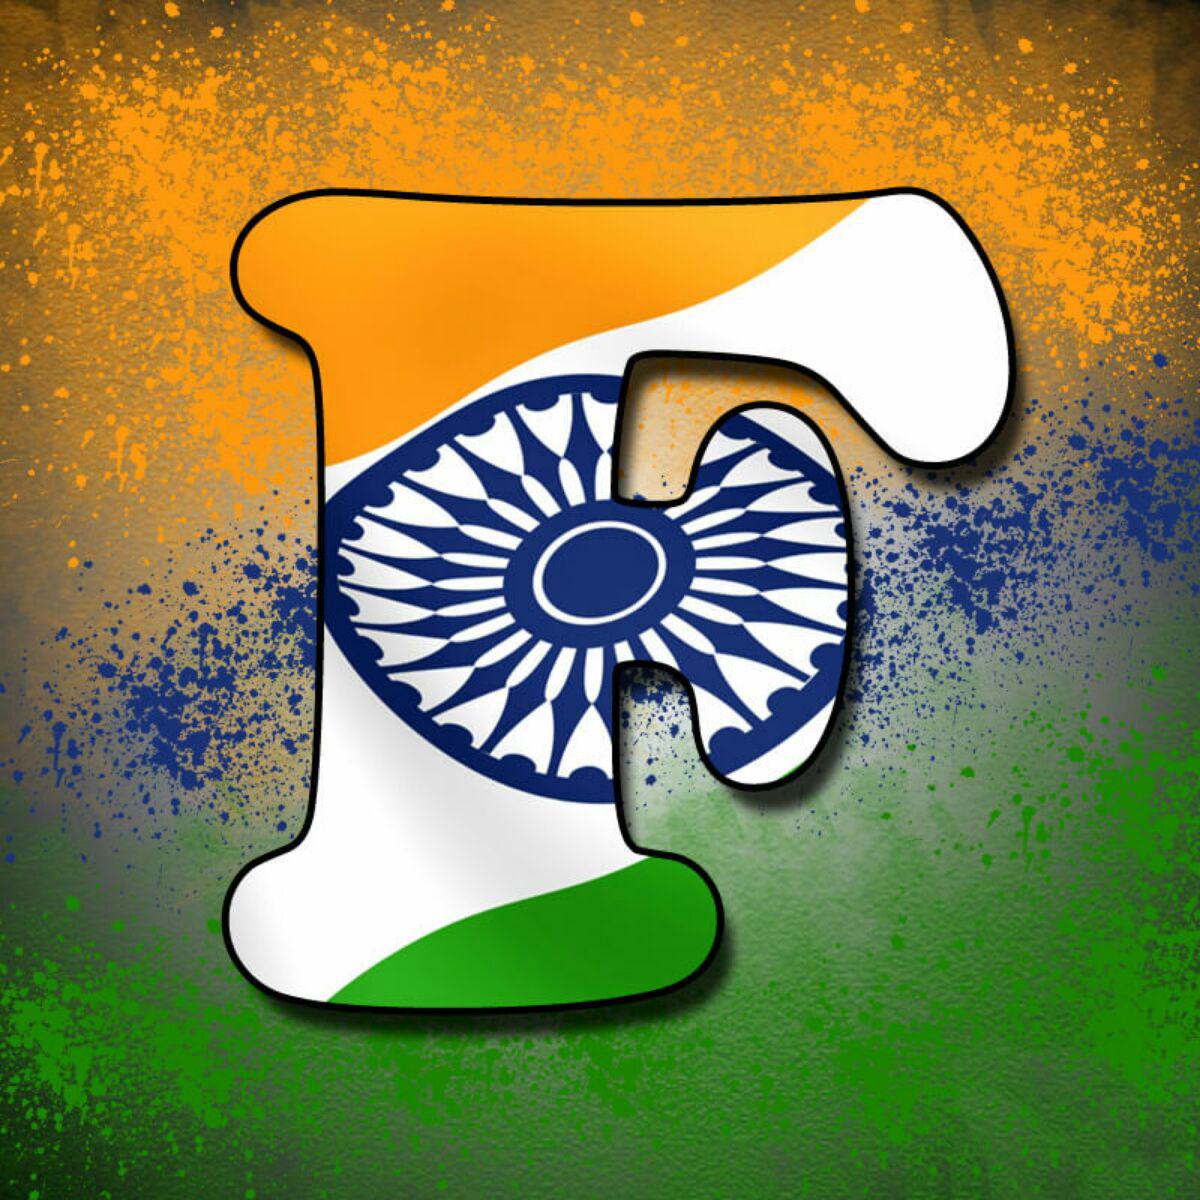 Tiranga Image Hd Indian Flag Photo Free Wallpaper Download - 15 August  Whatsapp Dp - 1200x1200 Wallpaper 